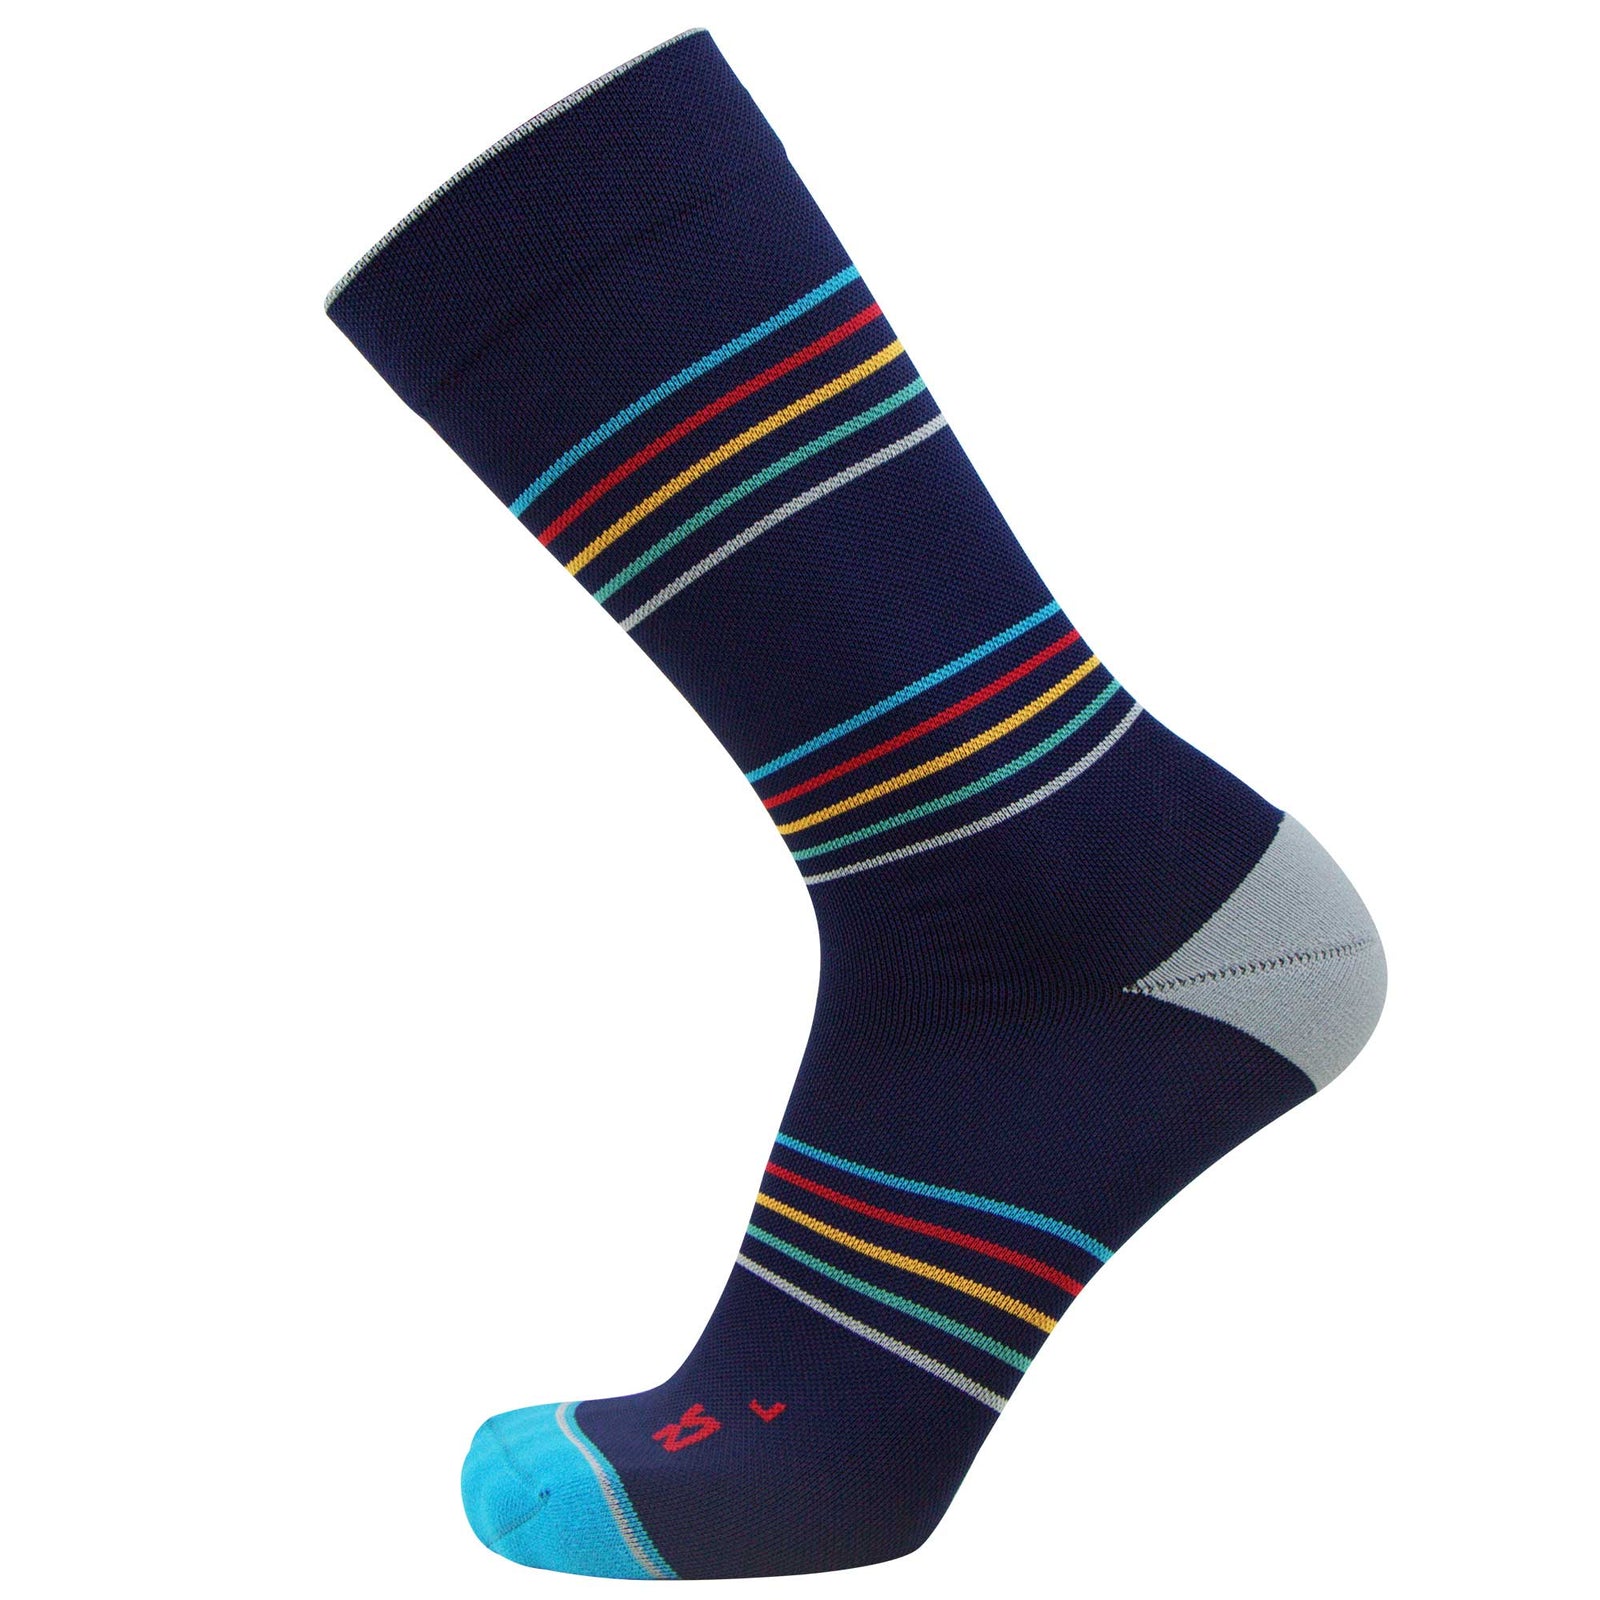 Nurse Compression Socks - Cute Compression Stockings | Fresh Legs